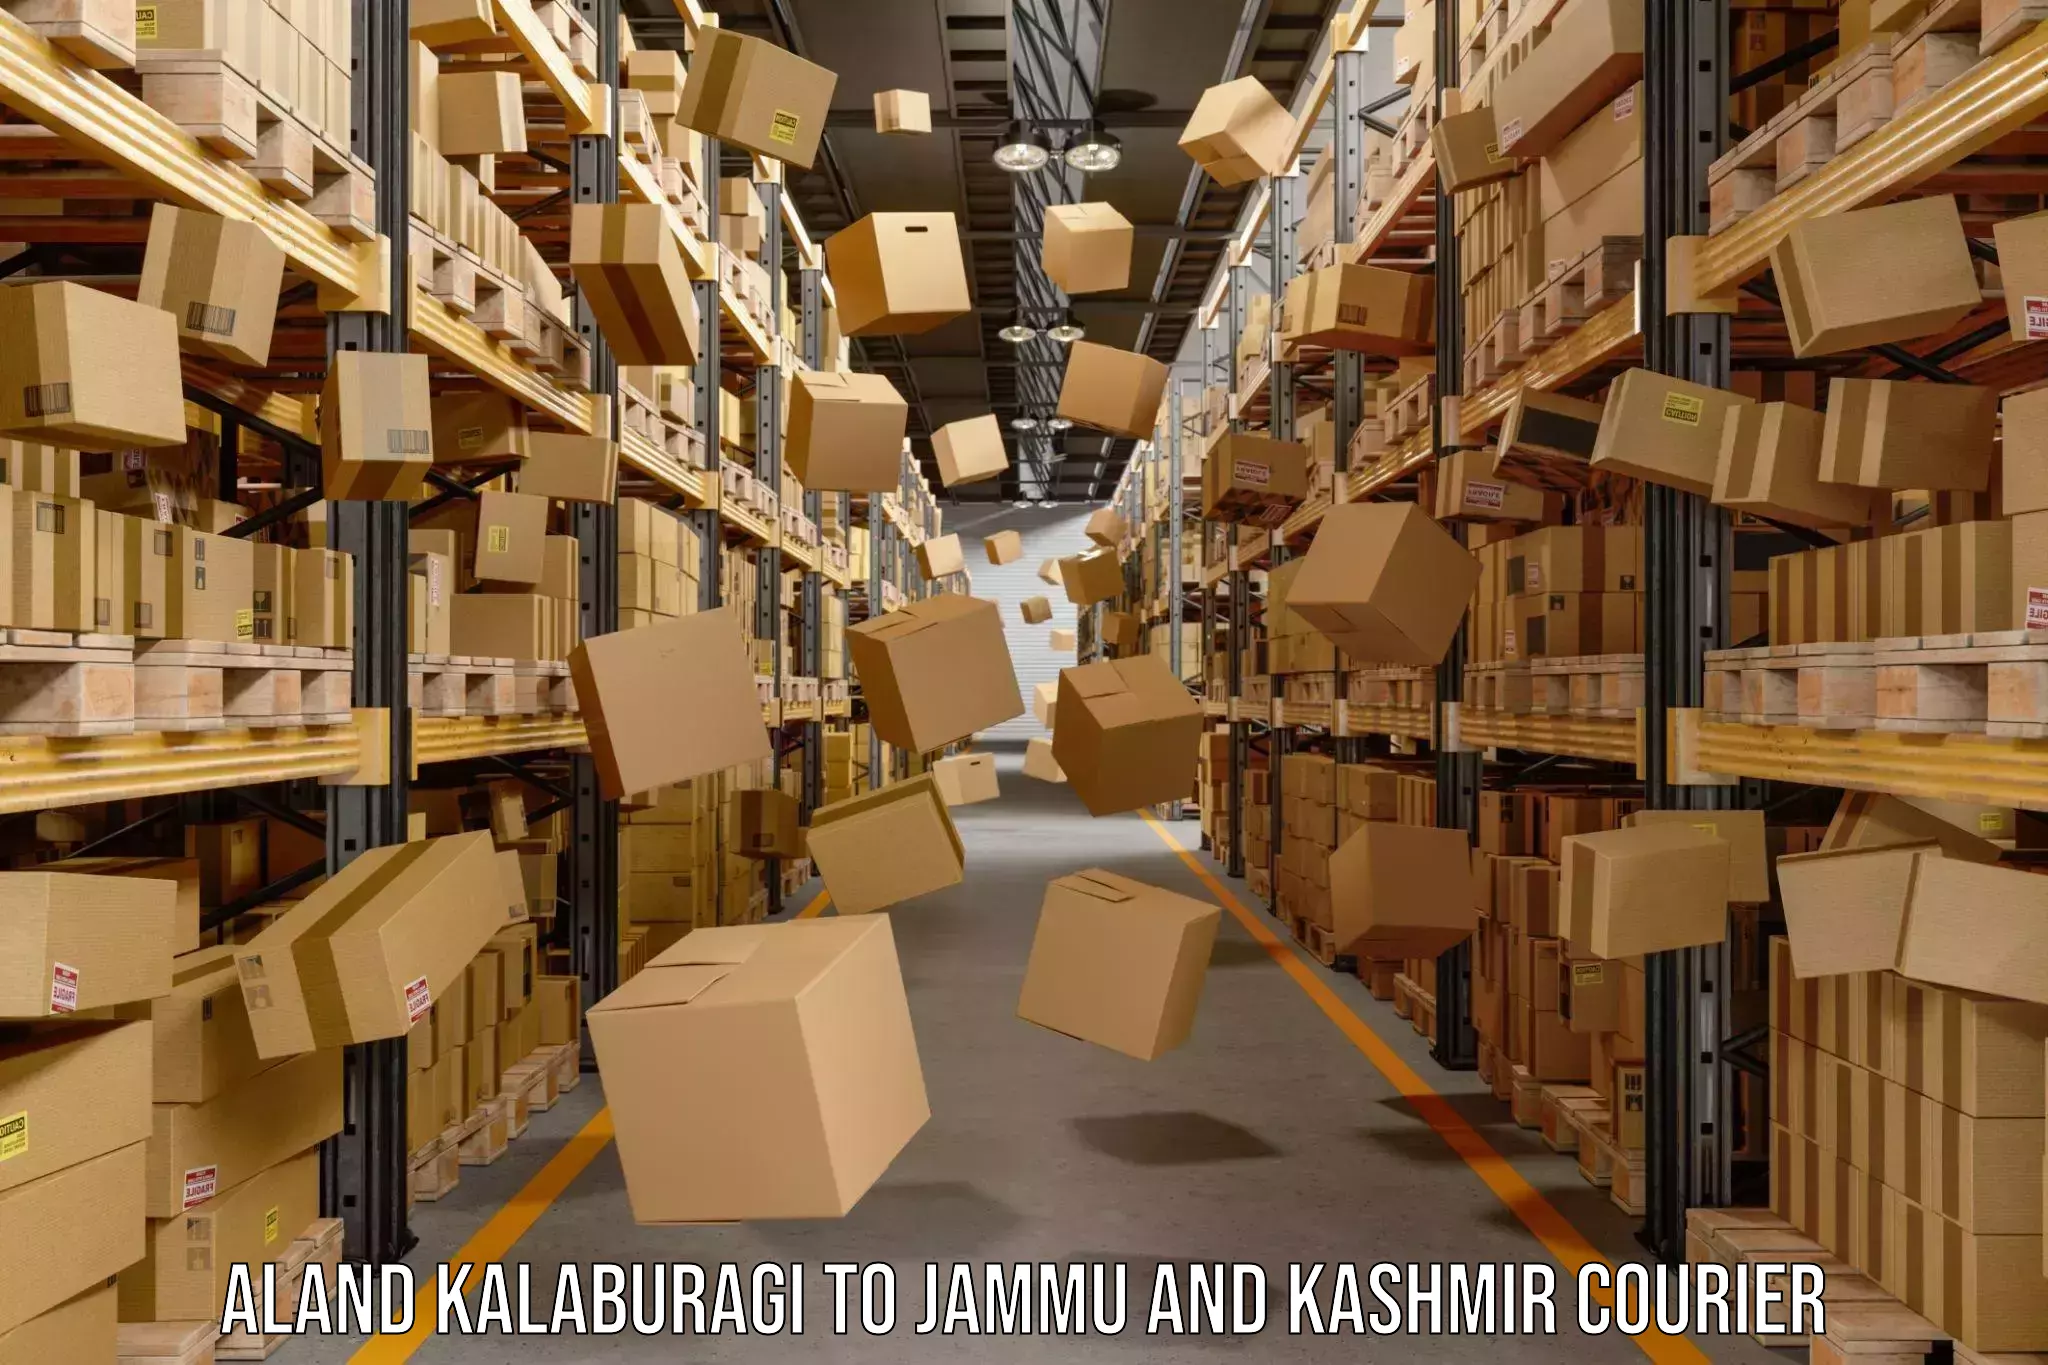 User-friendly courier app Aland Kalaburagi to University of Kashmir Srinagar